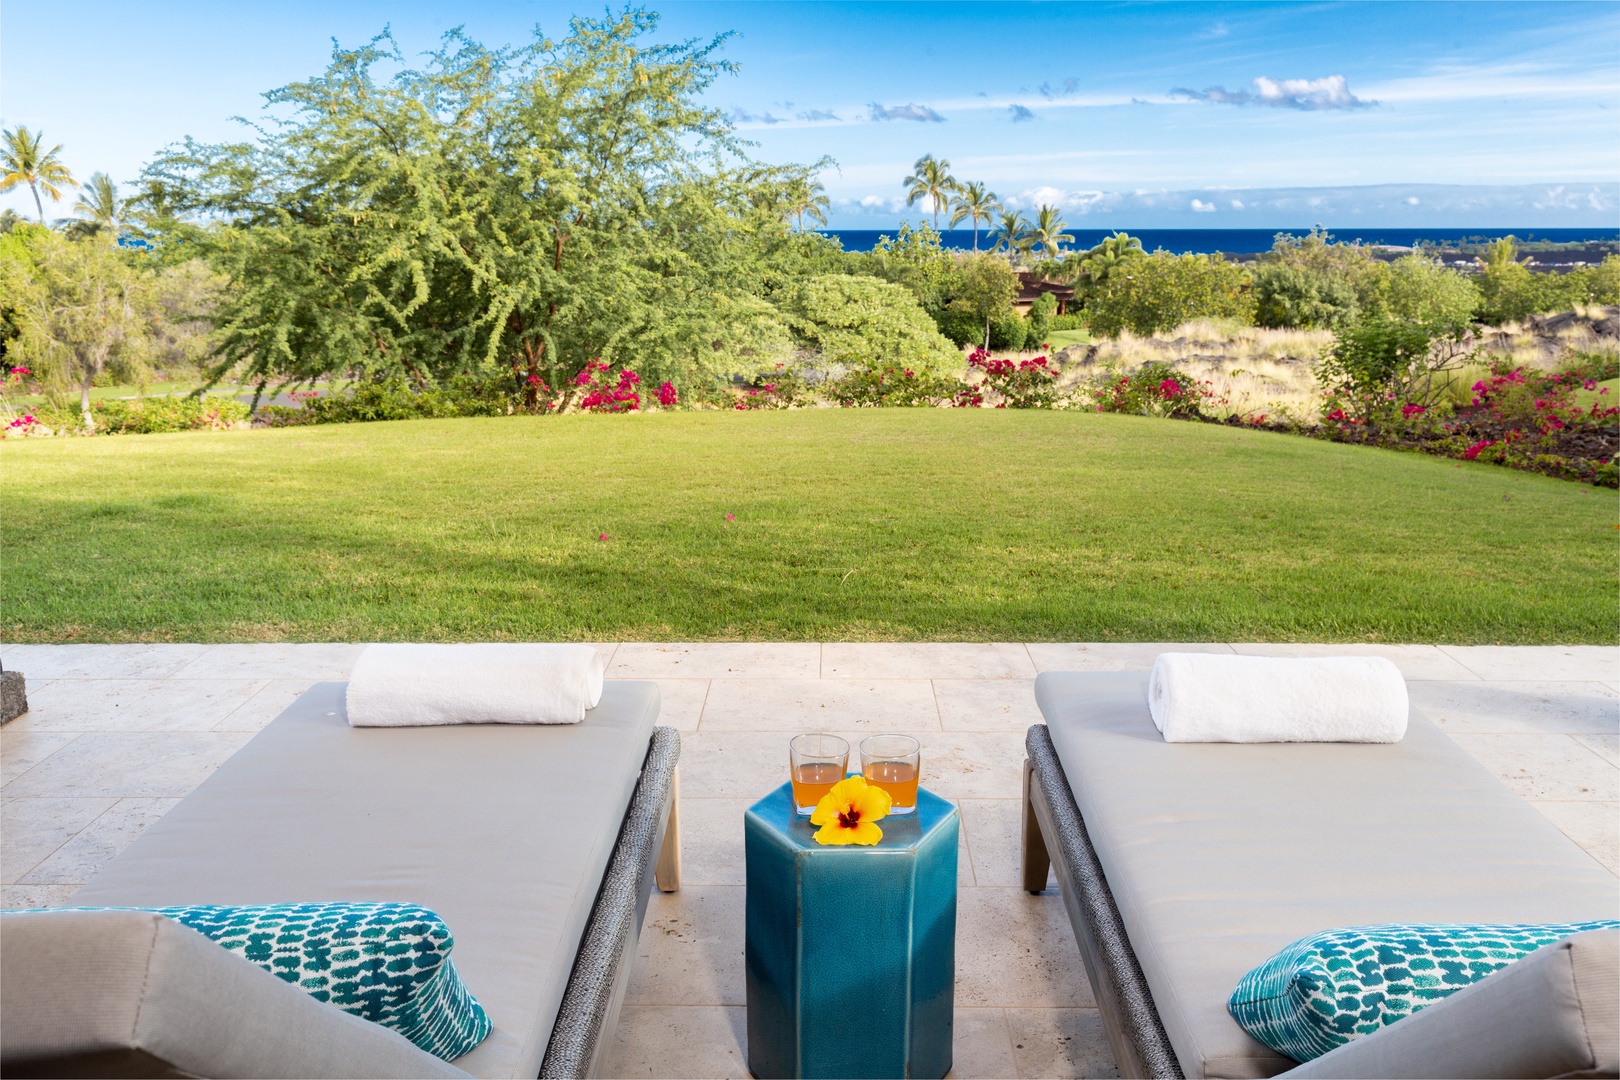 Kailua-Kona Vacation Rentals, 3BD Hali'ipua Villa (120) at Four Seasons Resort at Hualalai - Private lanai offering panoramic ocean view